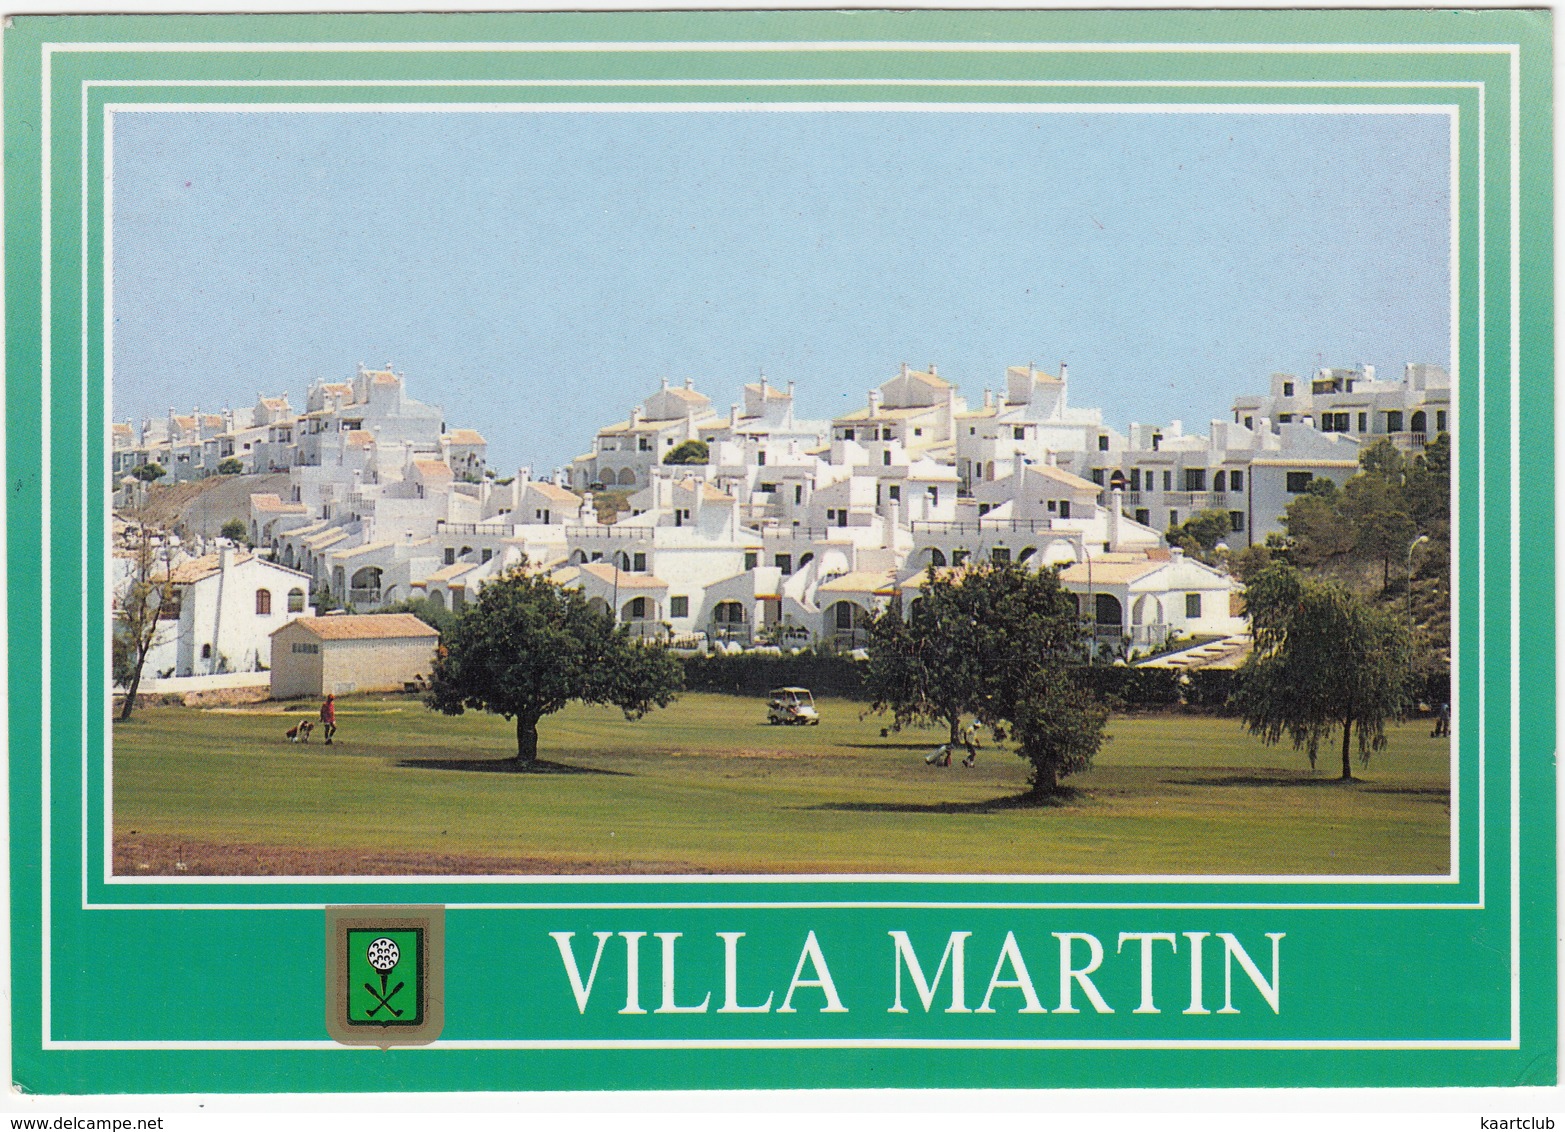 GOLF:  Villa Martin, Torrevieja, Alicante - GOLF COURSE , GOLF CART - (Espana/Spain) - Golf